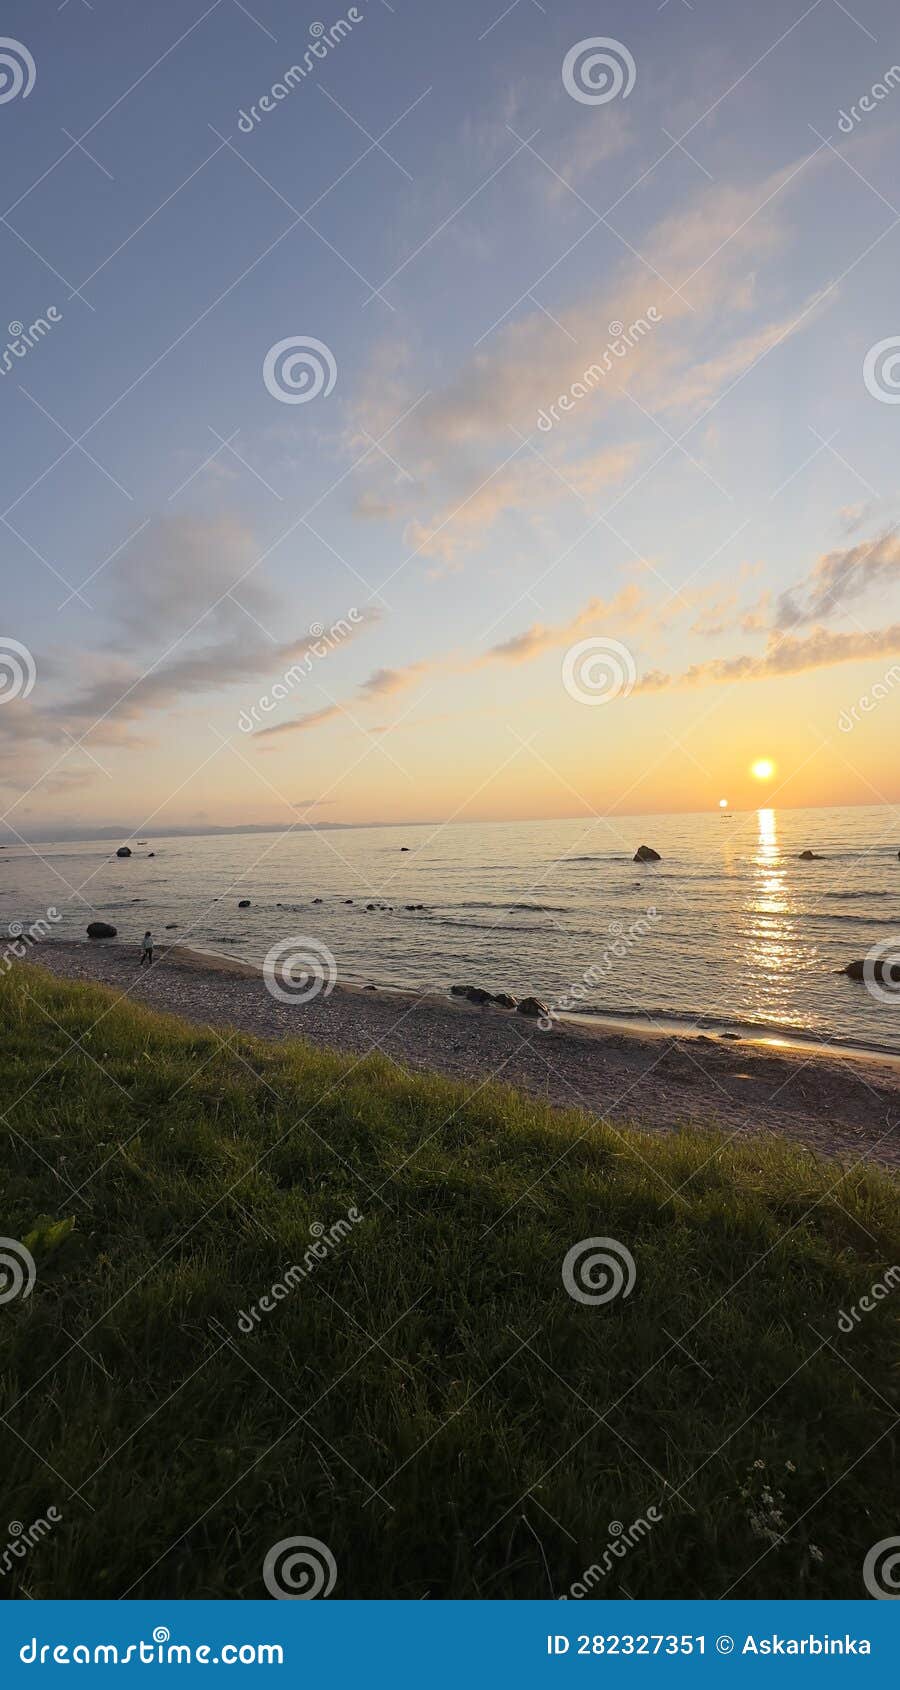 sunset over the black sea, tÃ¼rkiye, beach and sea at sunset.